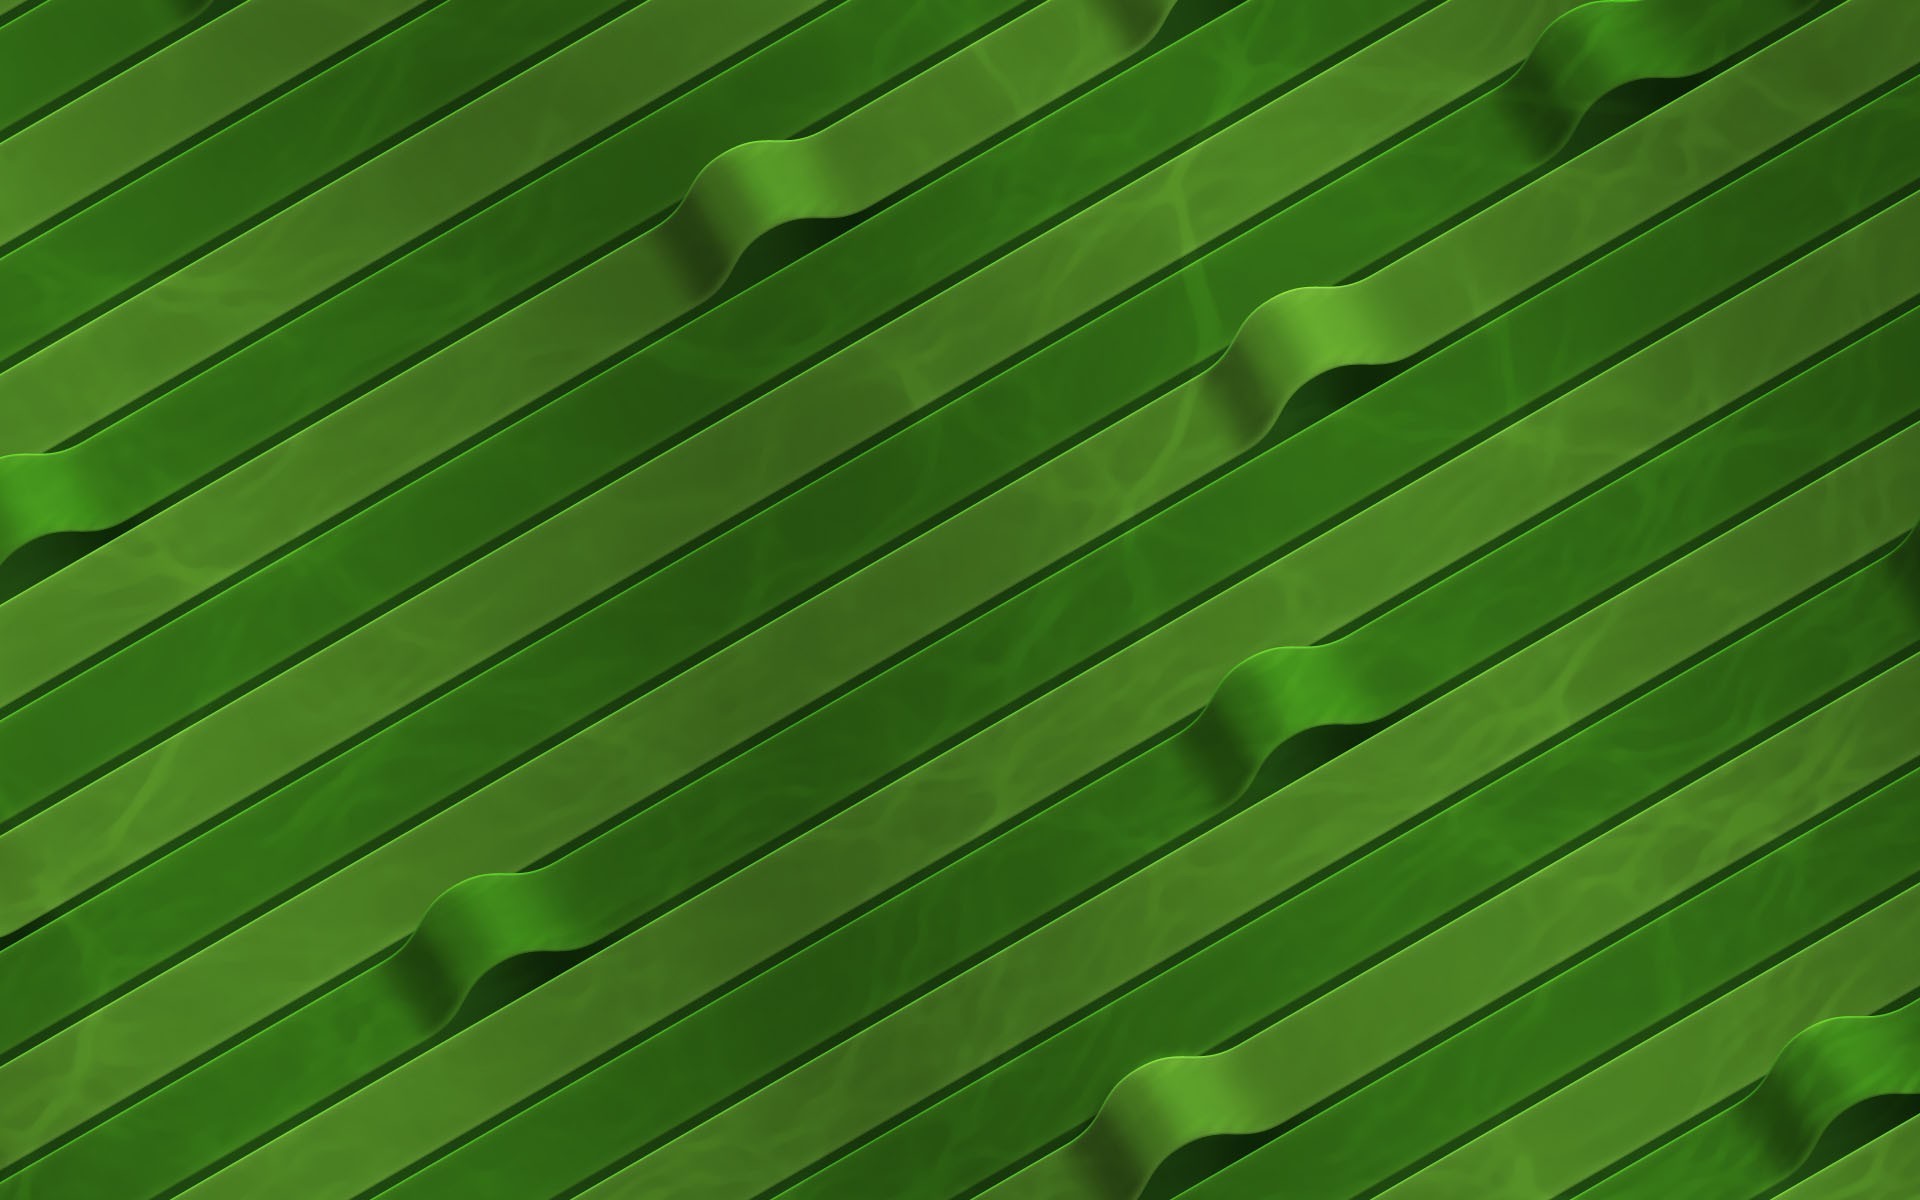 daigonal floor green lines texture, lines texture, backgrounds, background for website